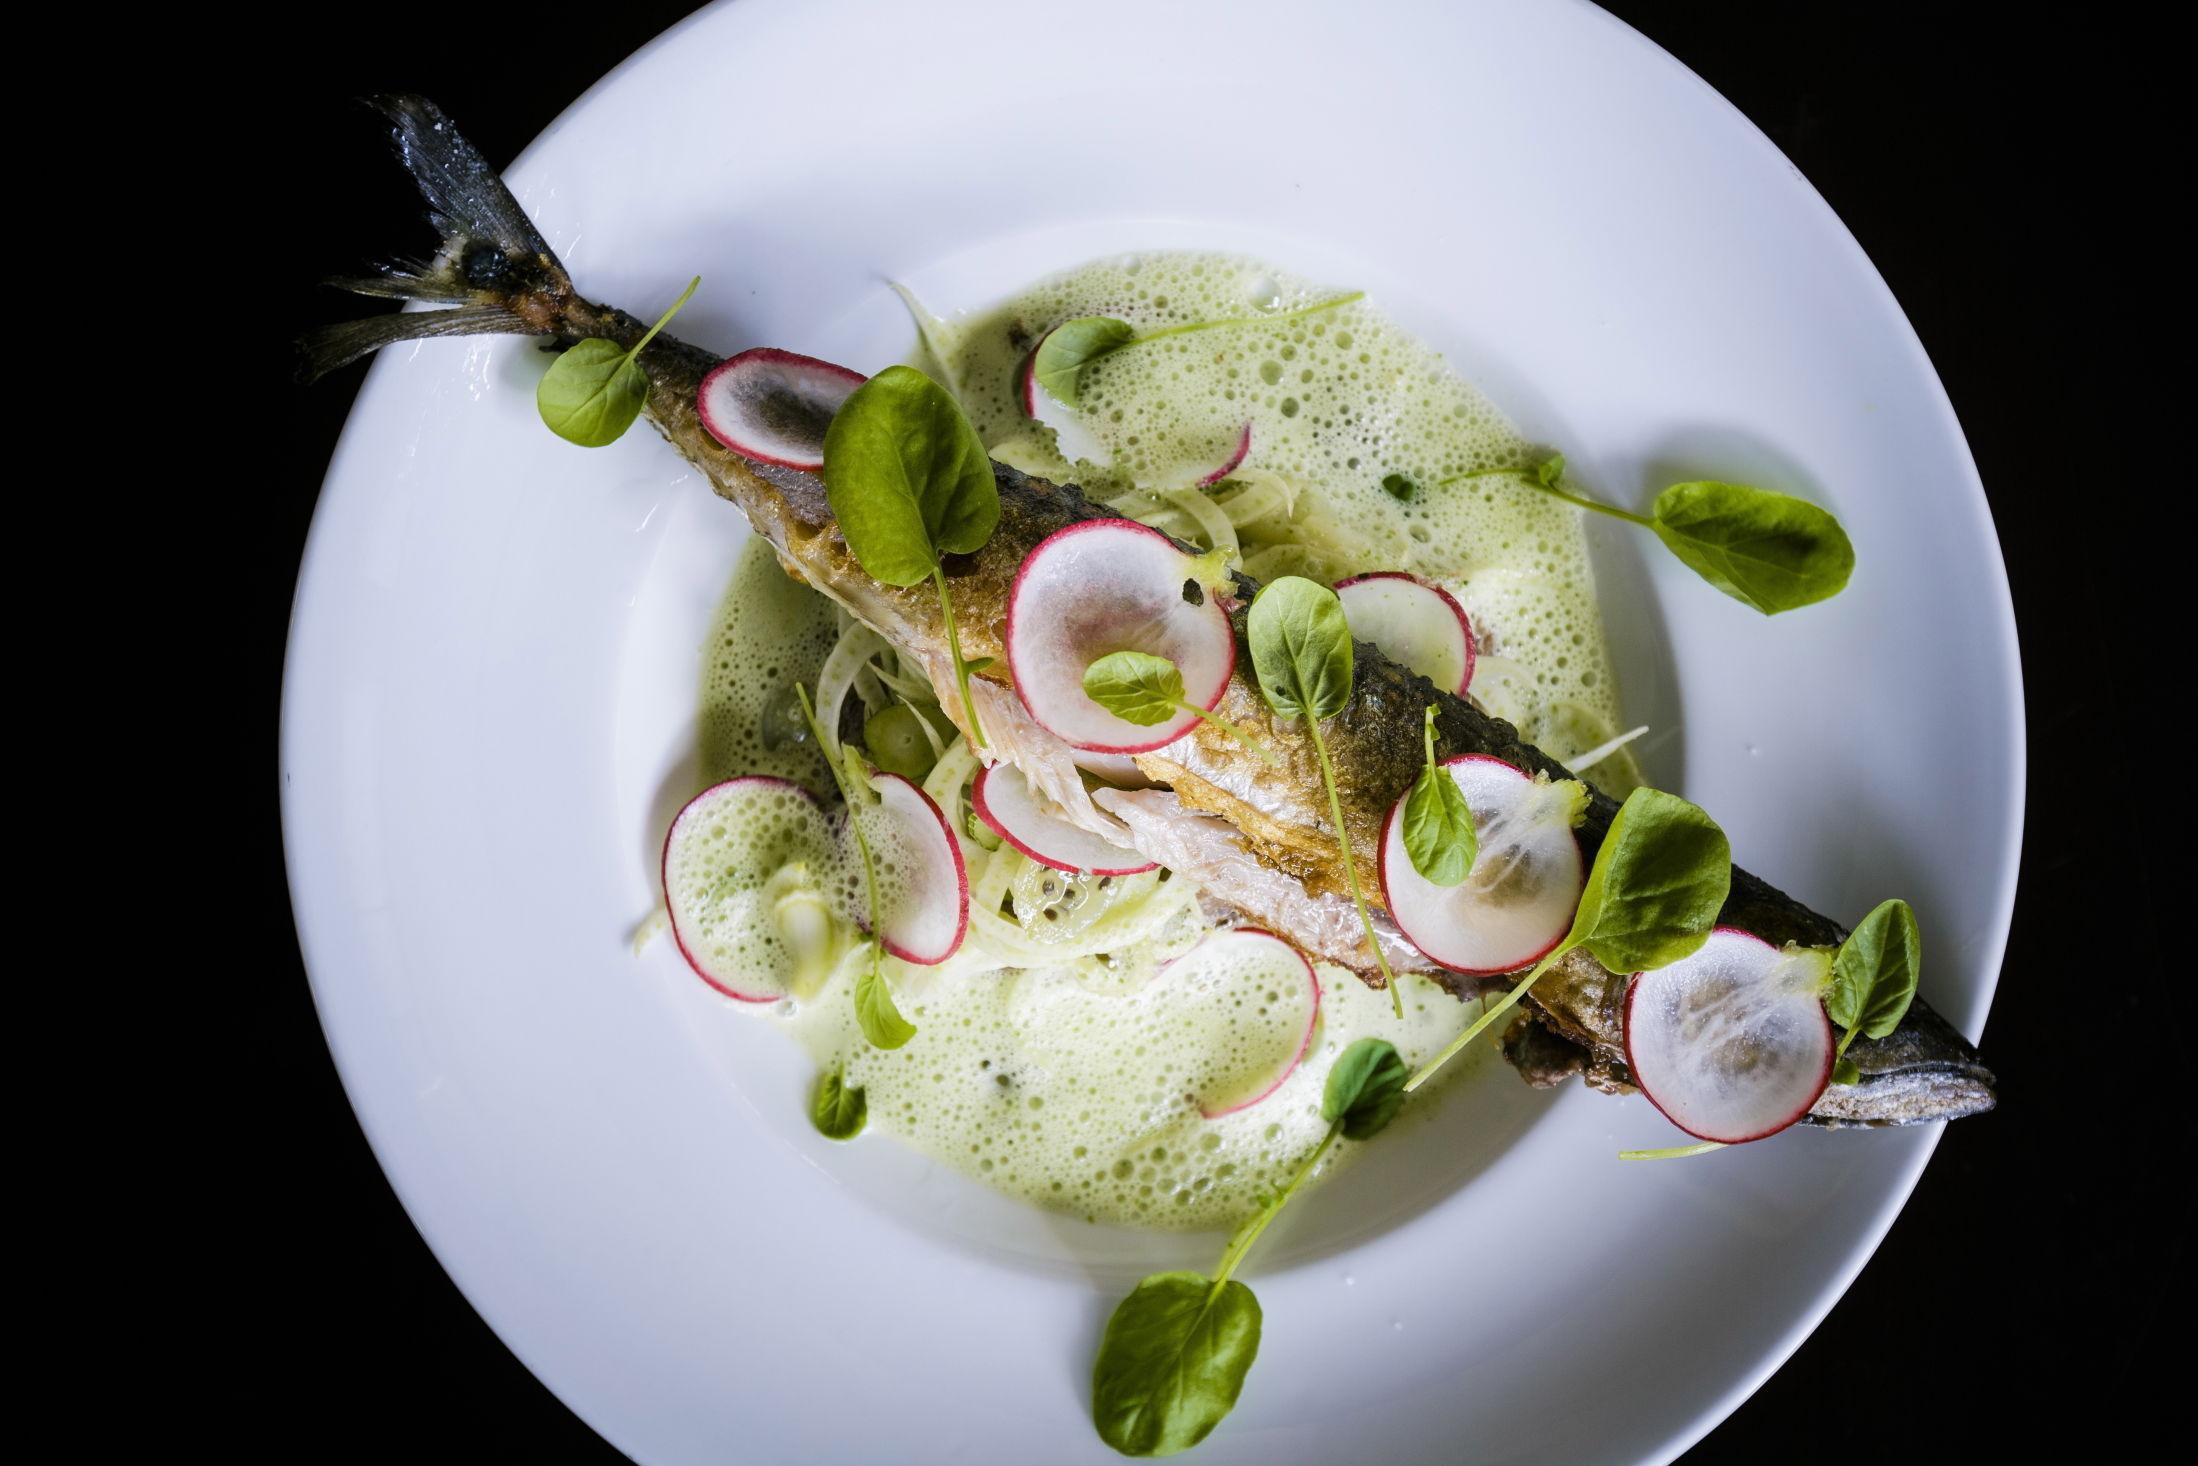 SENSOMMERSMAK: Stekt makrell med uventede og gode smaker til under 200-lappen er et røverkjøp ifølge VGs anmelder. Foto: Krister Sørbø/VG